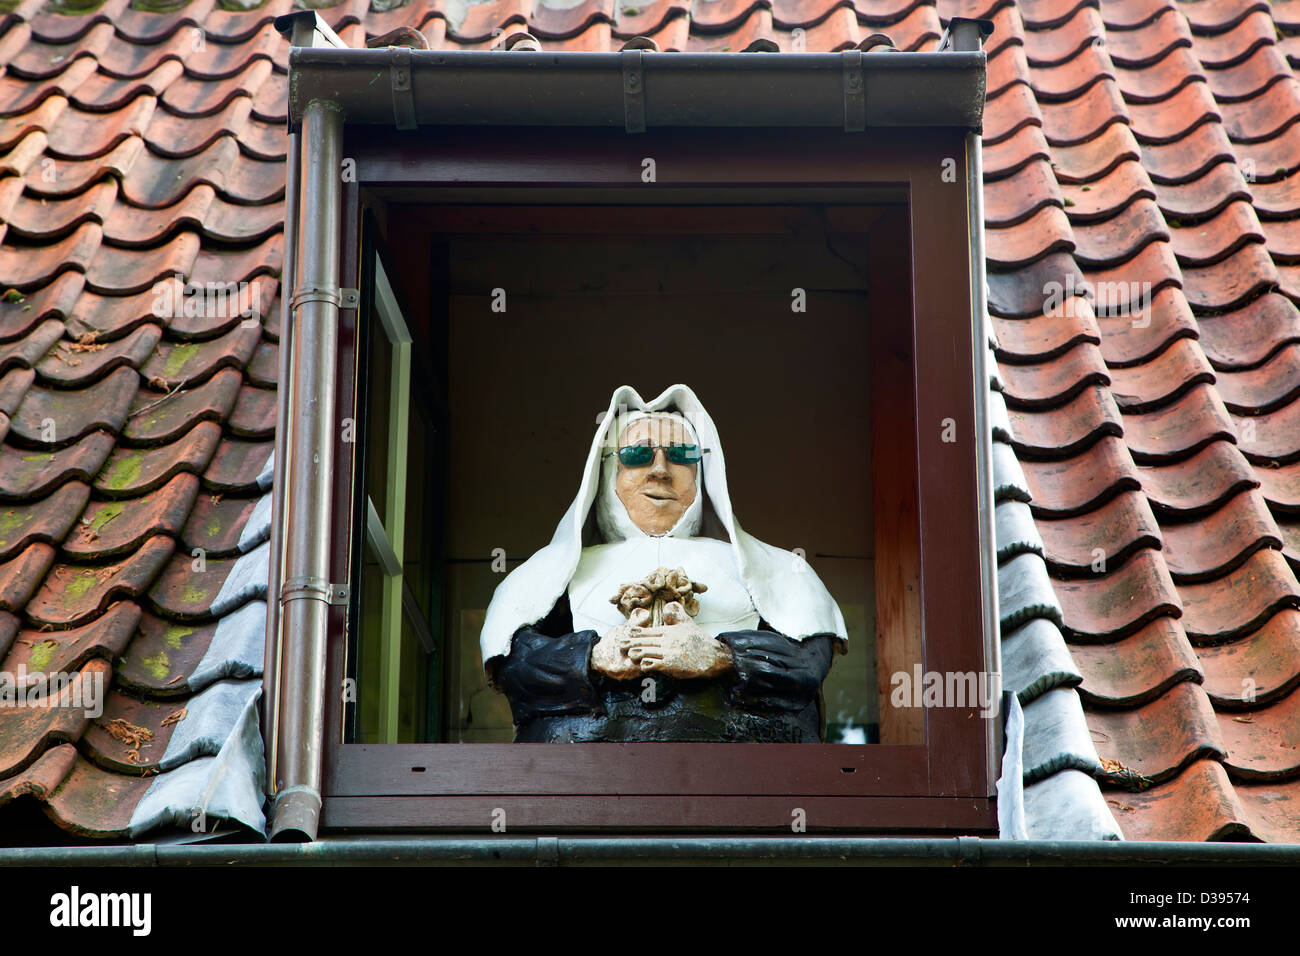 Nun scultura sulla finestra, Bruges, Belgio Foto Stock